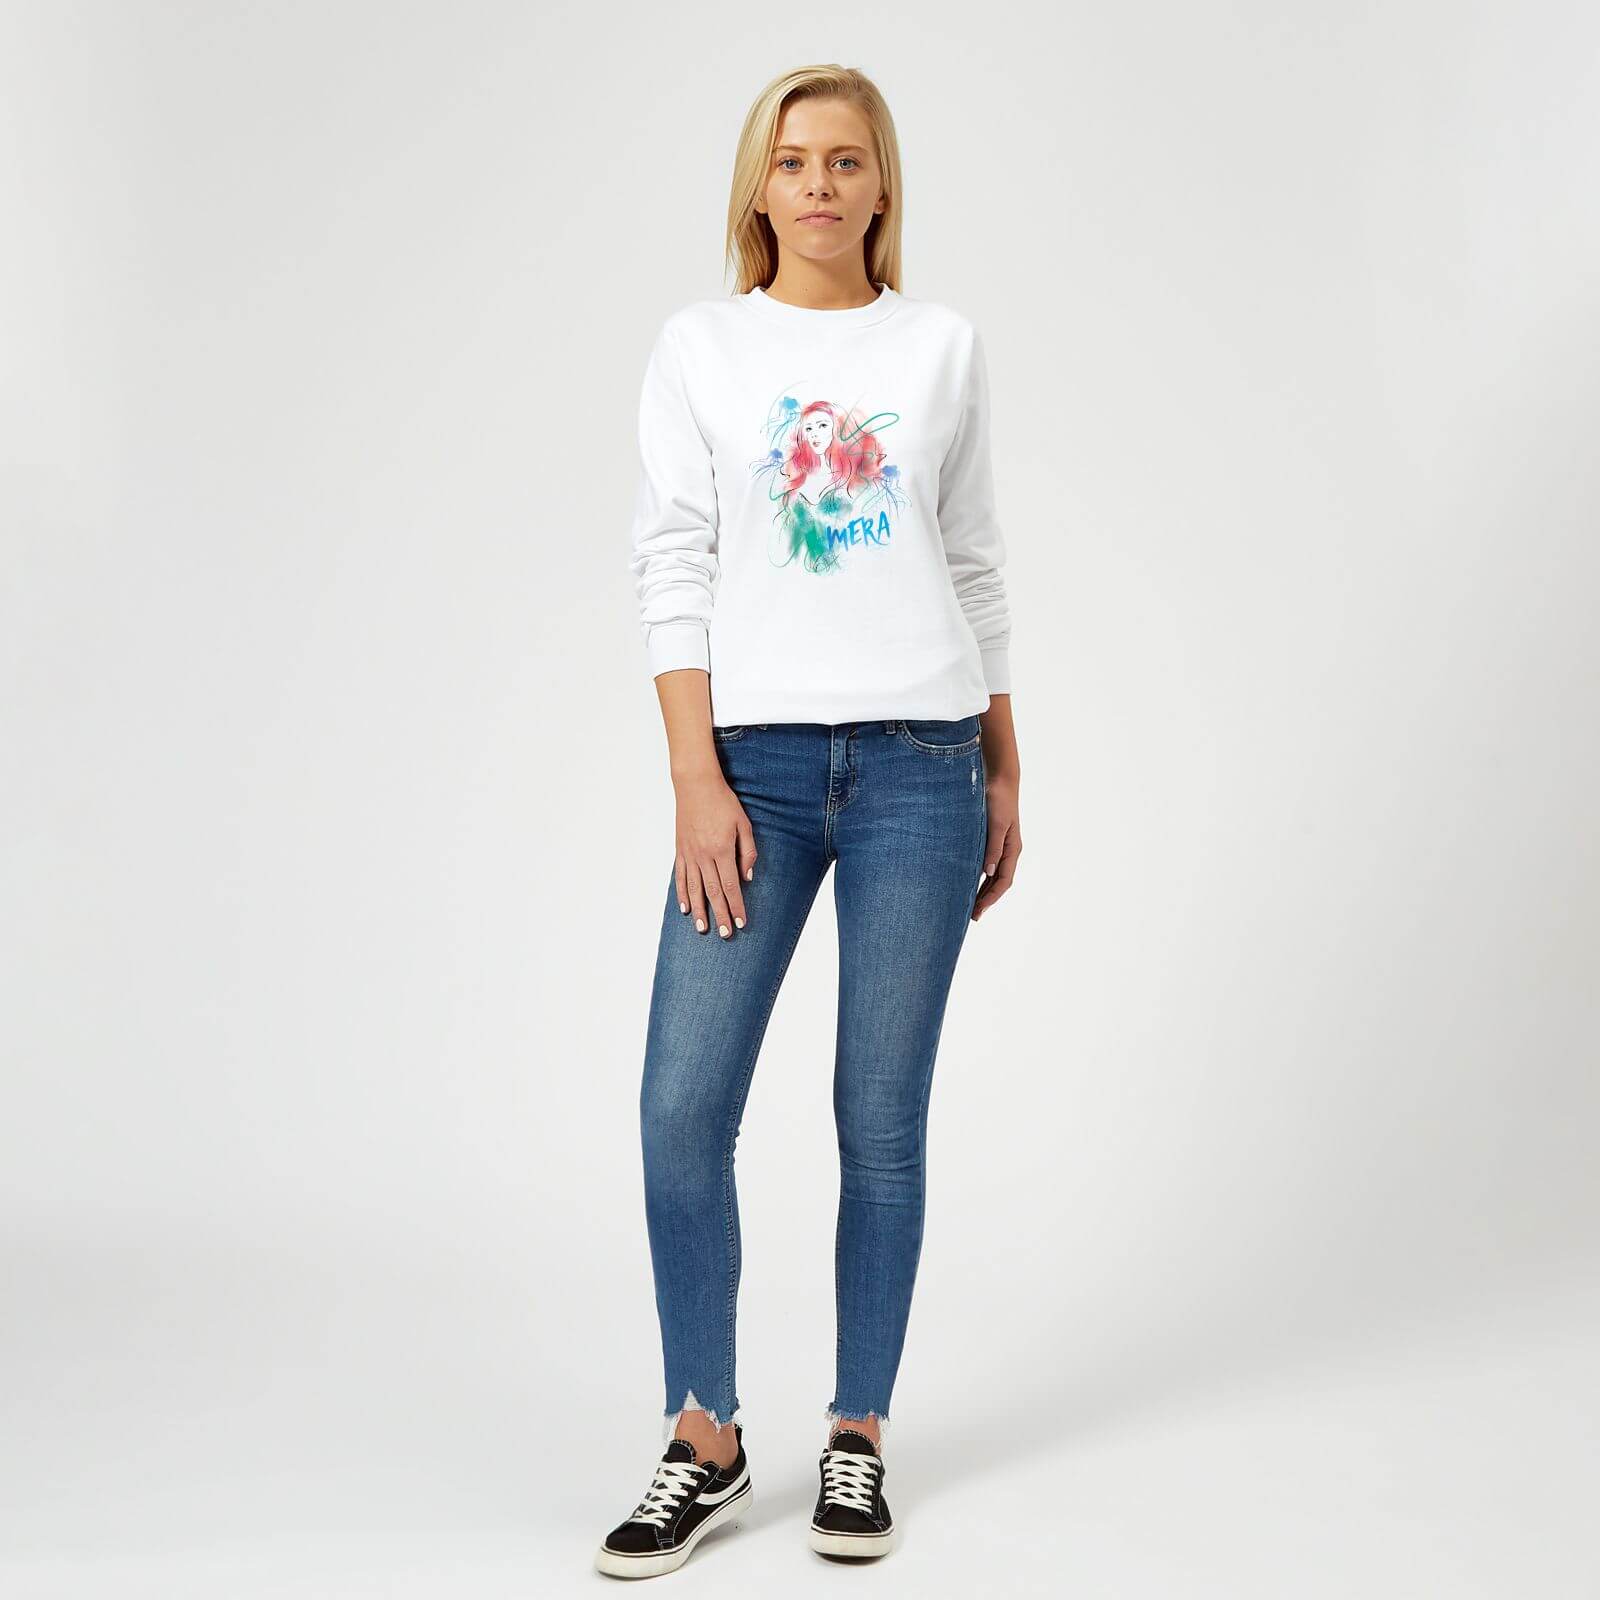 Aquaman Mera Damen Sweatshirt - Weiß - XXL - Weiß 3